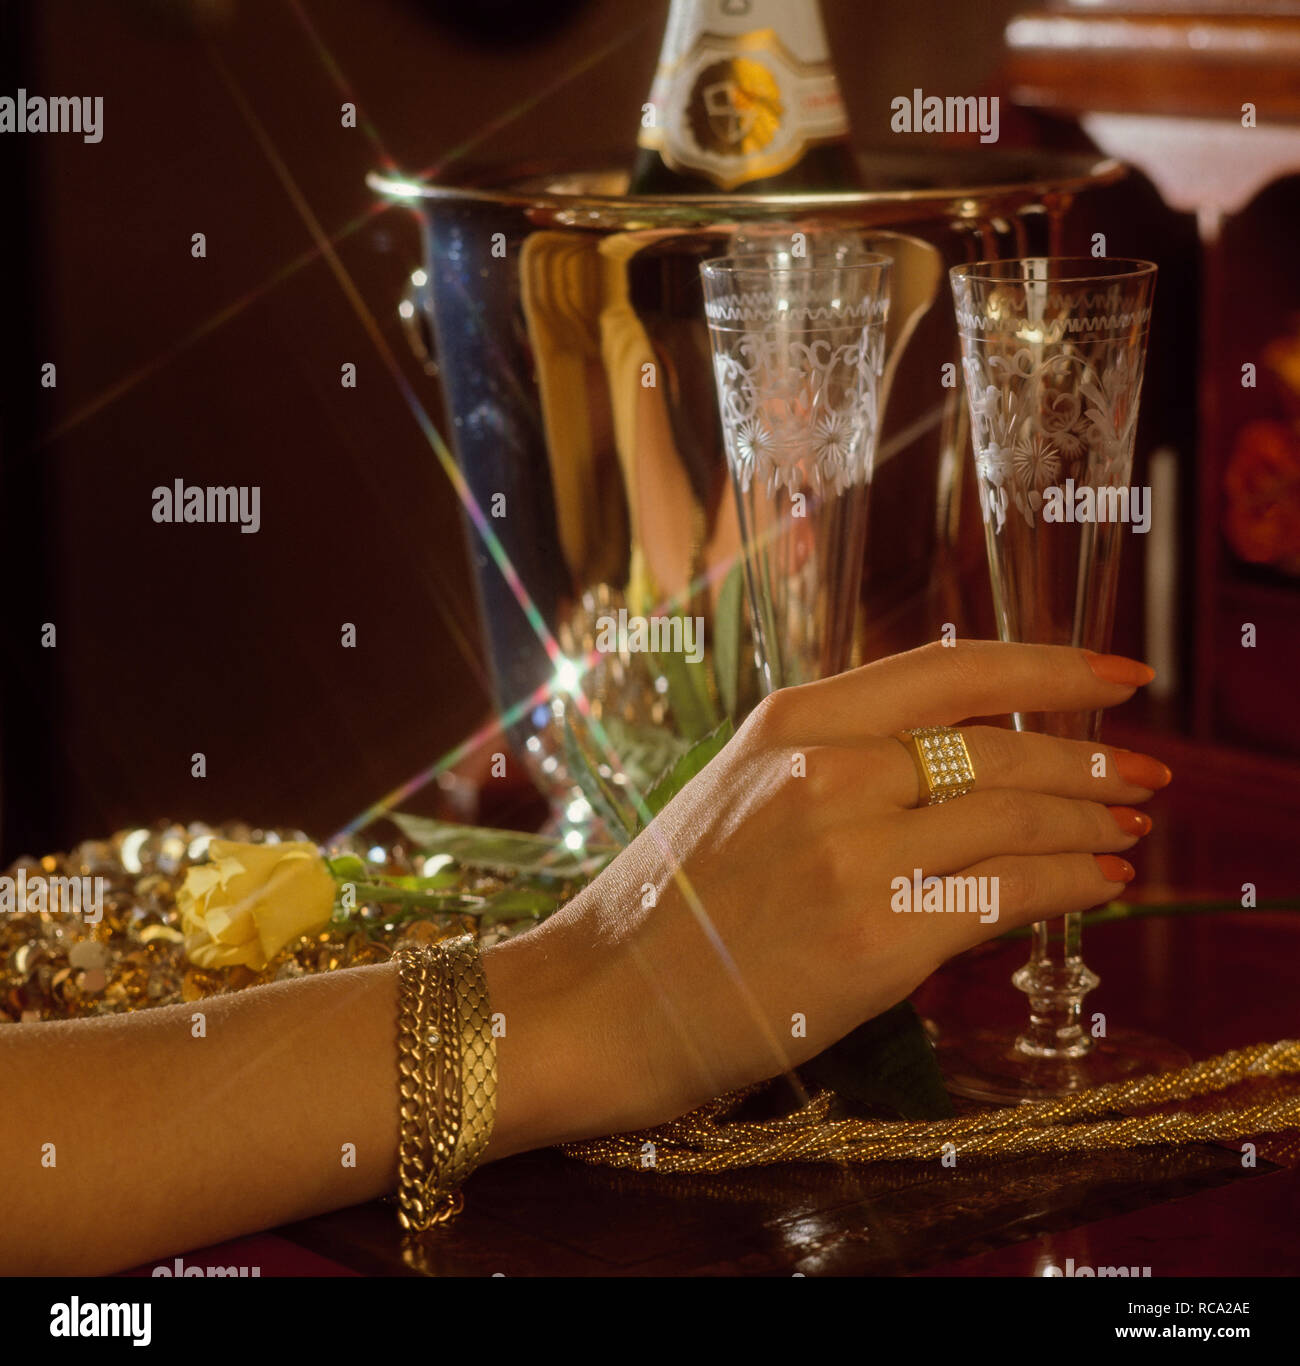 Frauenhand berührt Sektglas, HG Sektkübel, festlich | female hand touching champagne glass, celebration, event *** Local Caption *** Modelrelease vorh Stock Photo